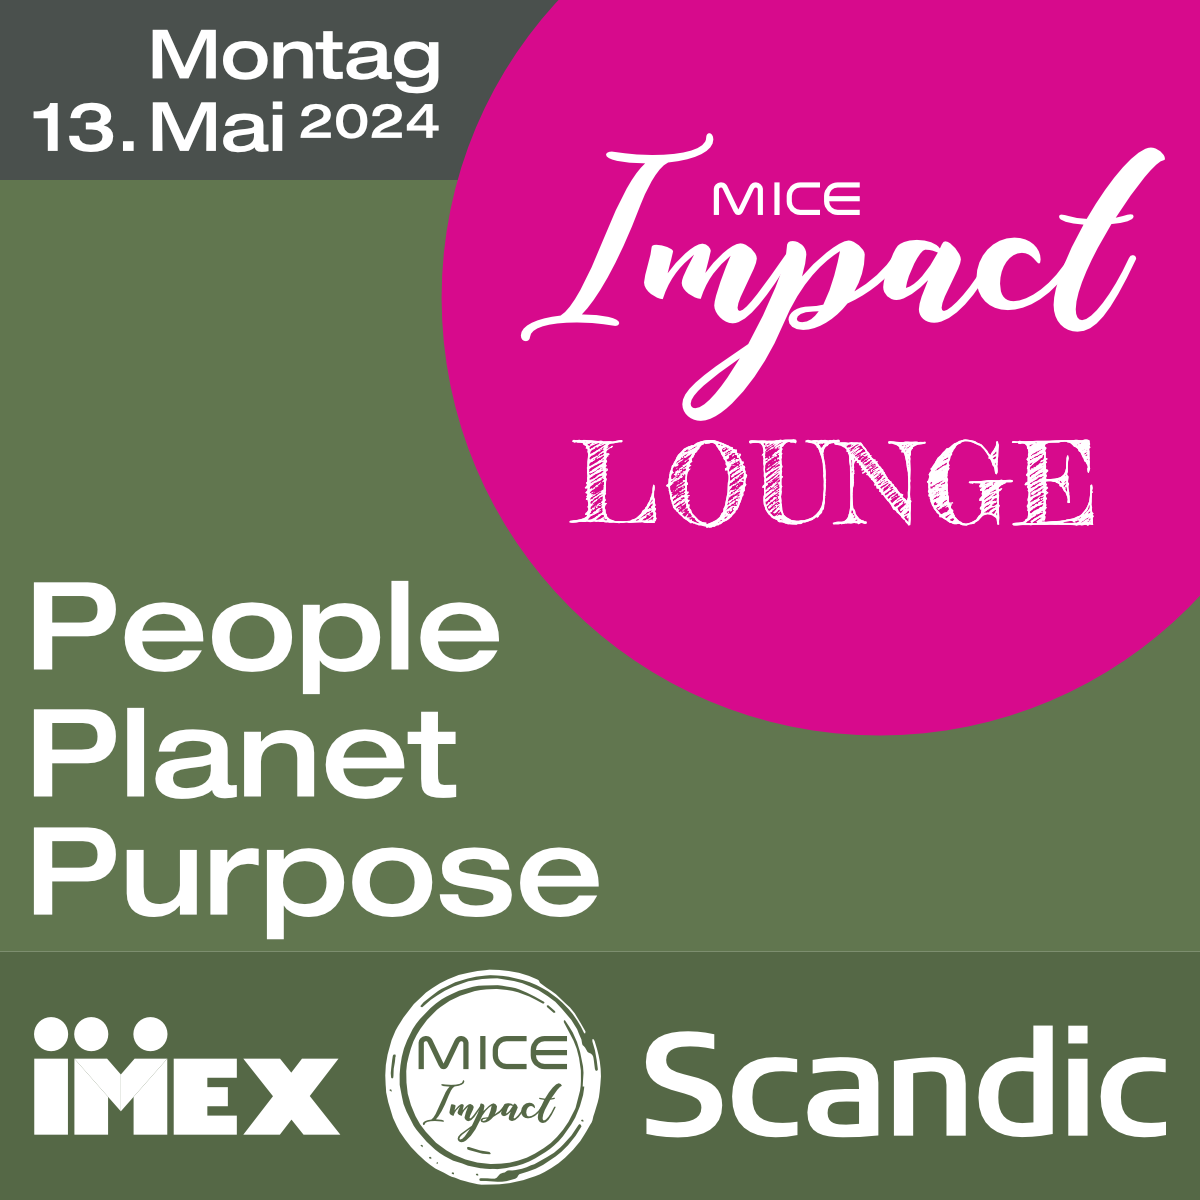 MICE Impact Lounge 13. Mai 2024 - People Planet Purpose - IMEX Scandic Hotel Frankfurt Museumsufer - Logo